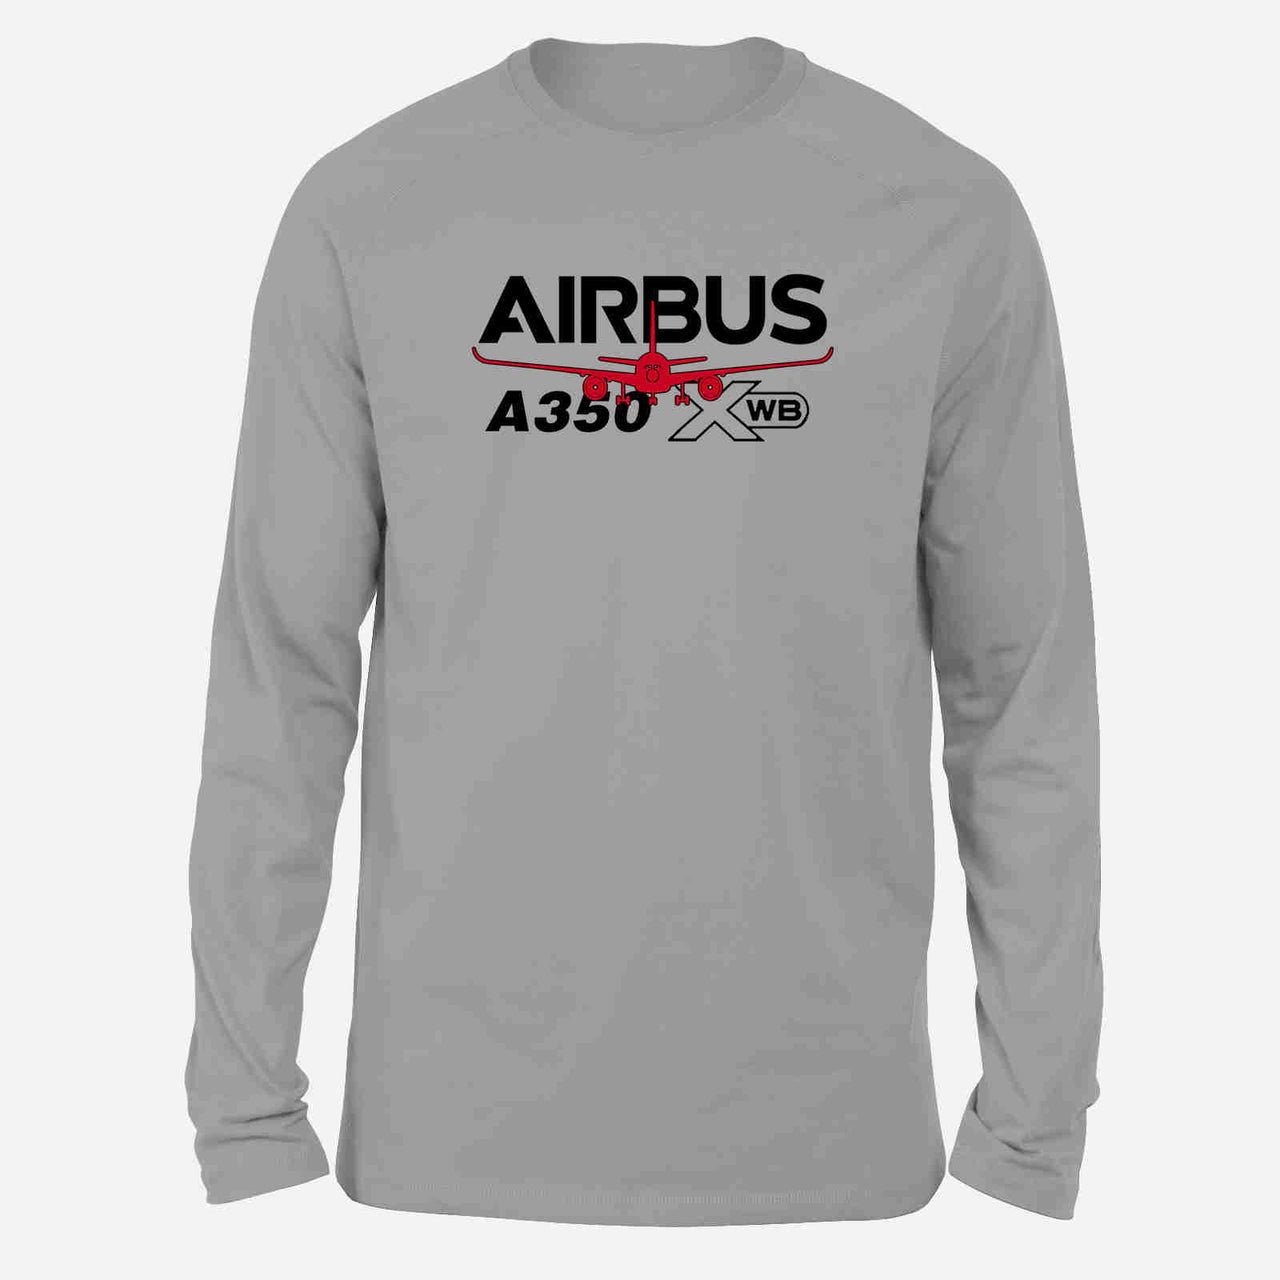 Amazing Airbus A350 XWB Designed Long-Sleeve T-Shirts